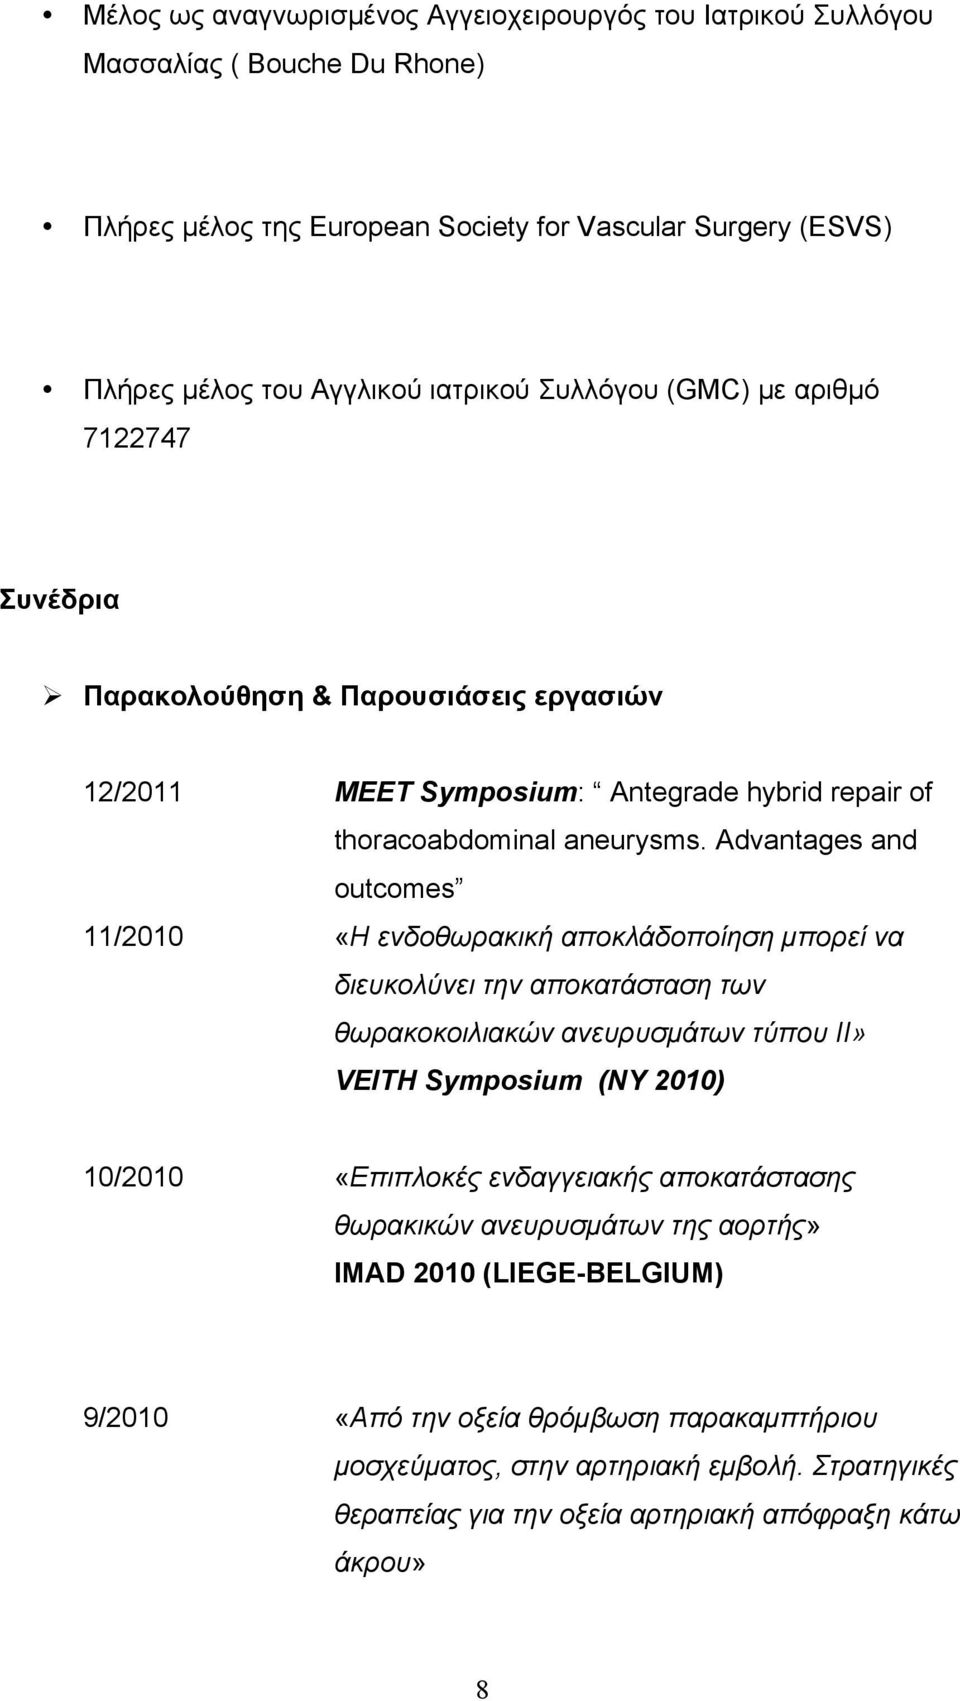 Advantages and outcomes 11/2010 «Η ενδοθωρακική αποκλάδοποίηση µπορεί να διευκολύνει την αποκατάσταση των θωρακοκοιλιακών ανευρυσµάτων τύπου ΙΙ» VEITH Symposium (NY 2010) 10/2010 «Επιπλοκές